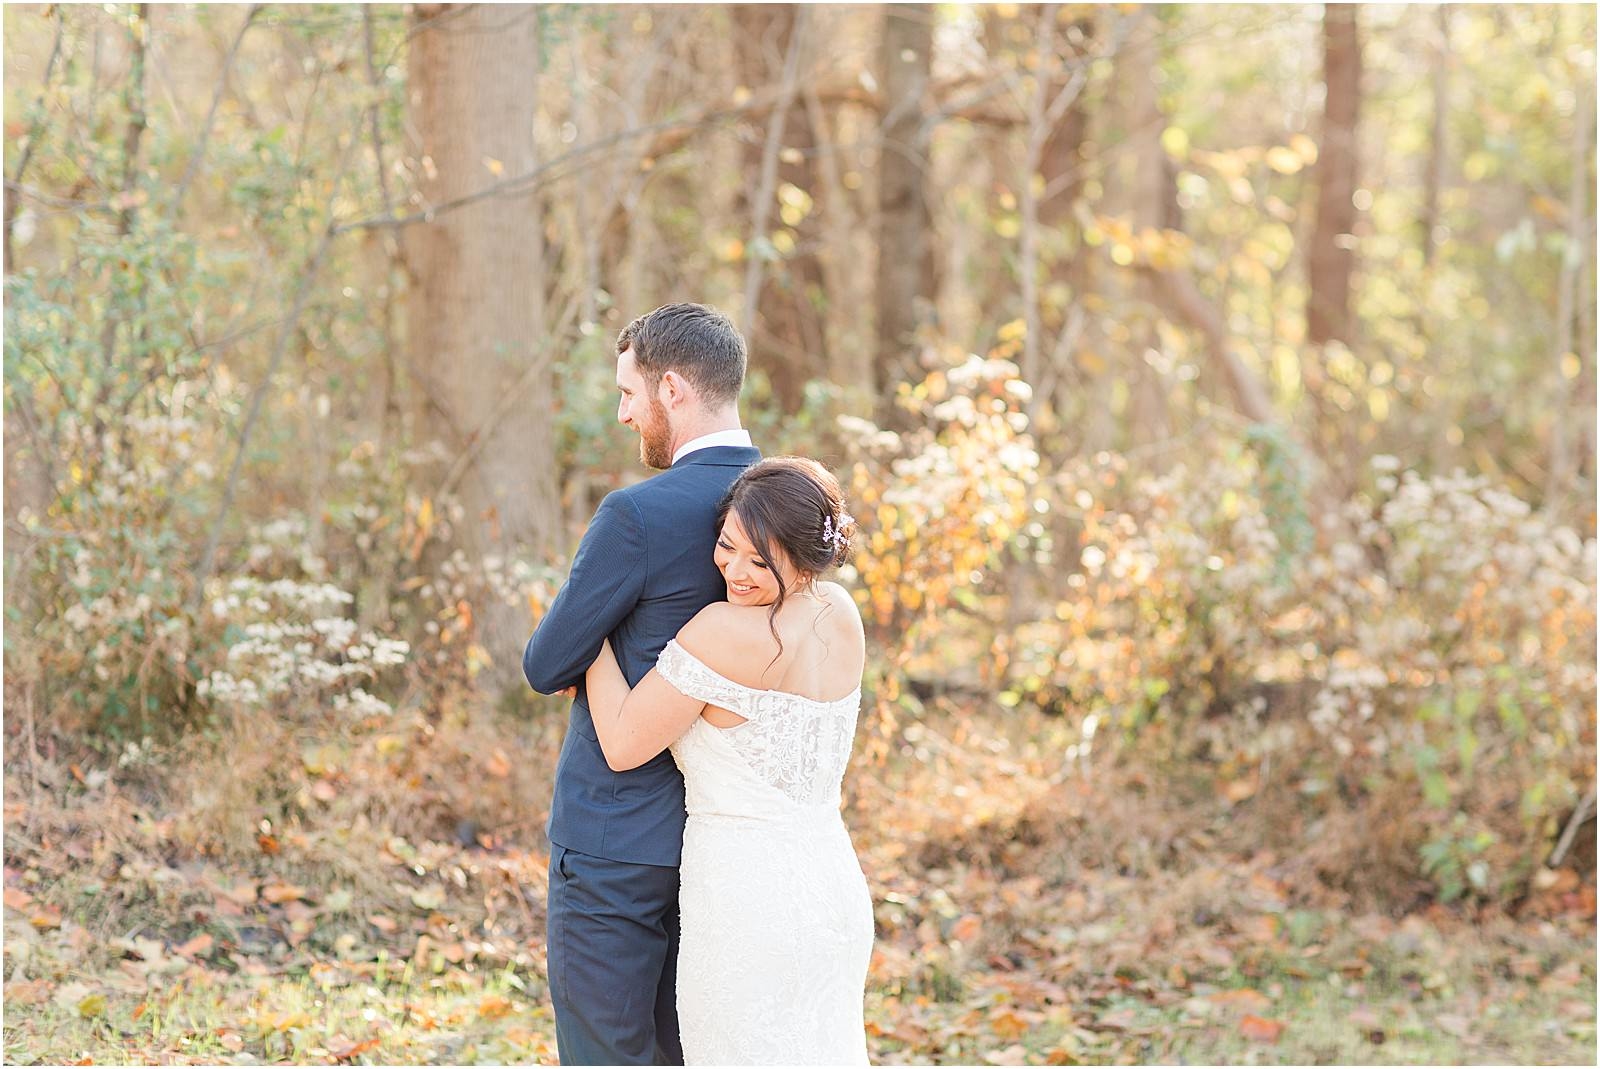 Walker and Alyssa's intimate fall wedding in Southern Indiana. | Wedding Photography | The Corner House Wedding | Southern Indiana Wedding | #fallwedding #intimatewedding | 024.jpg